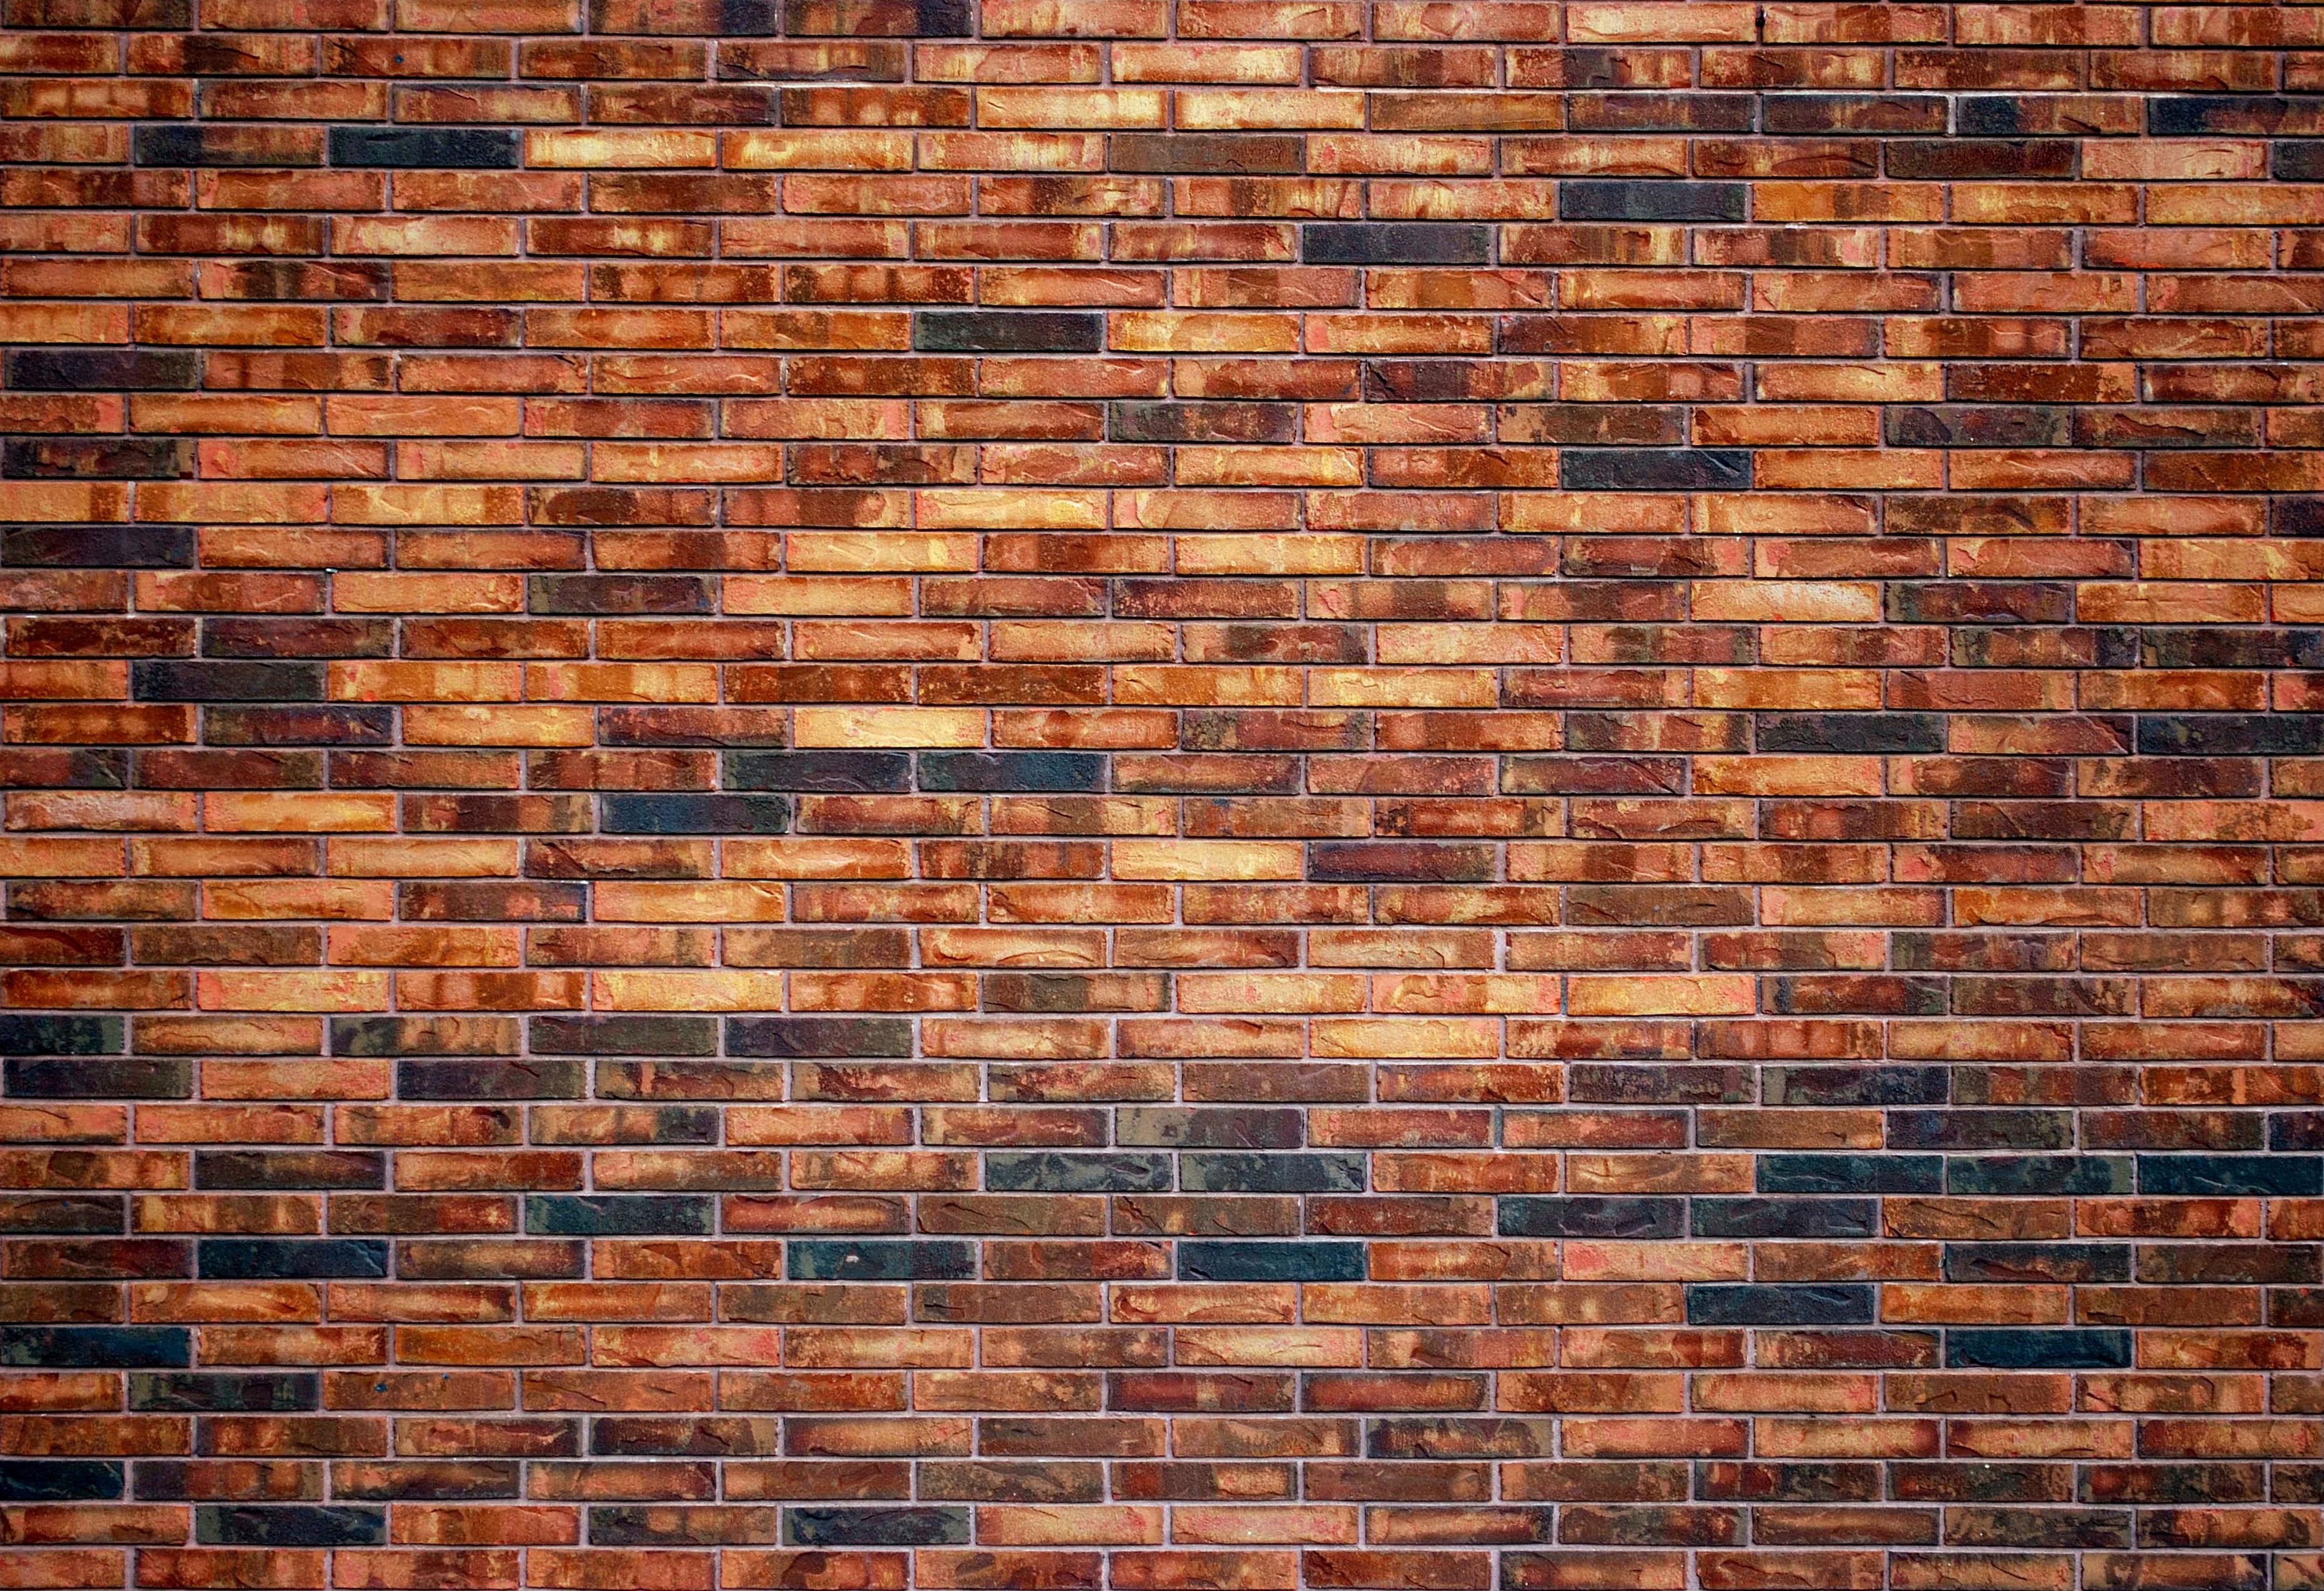 Brick Background Download free